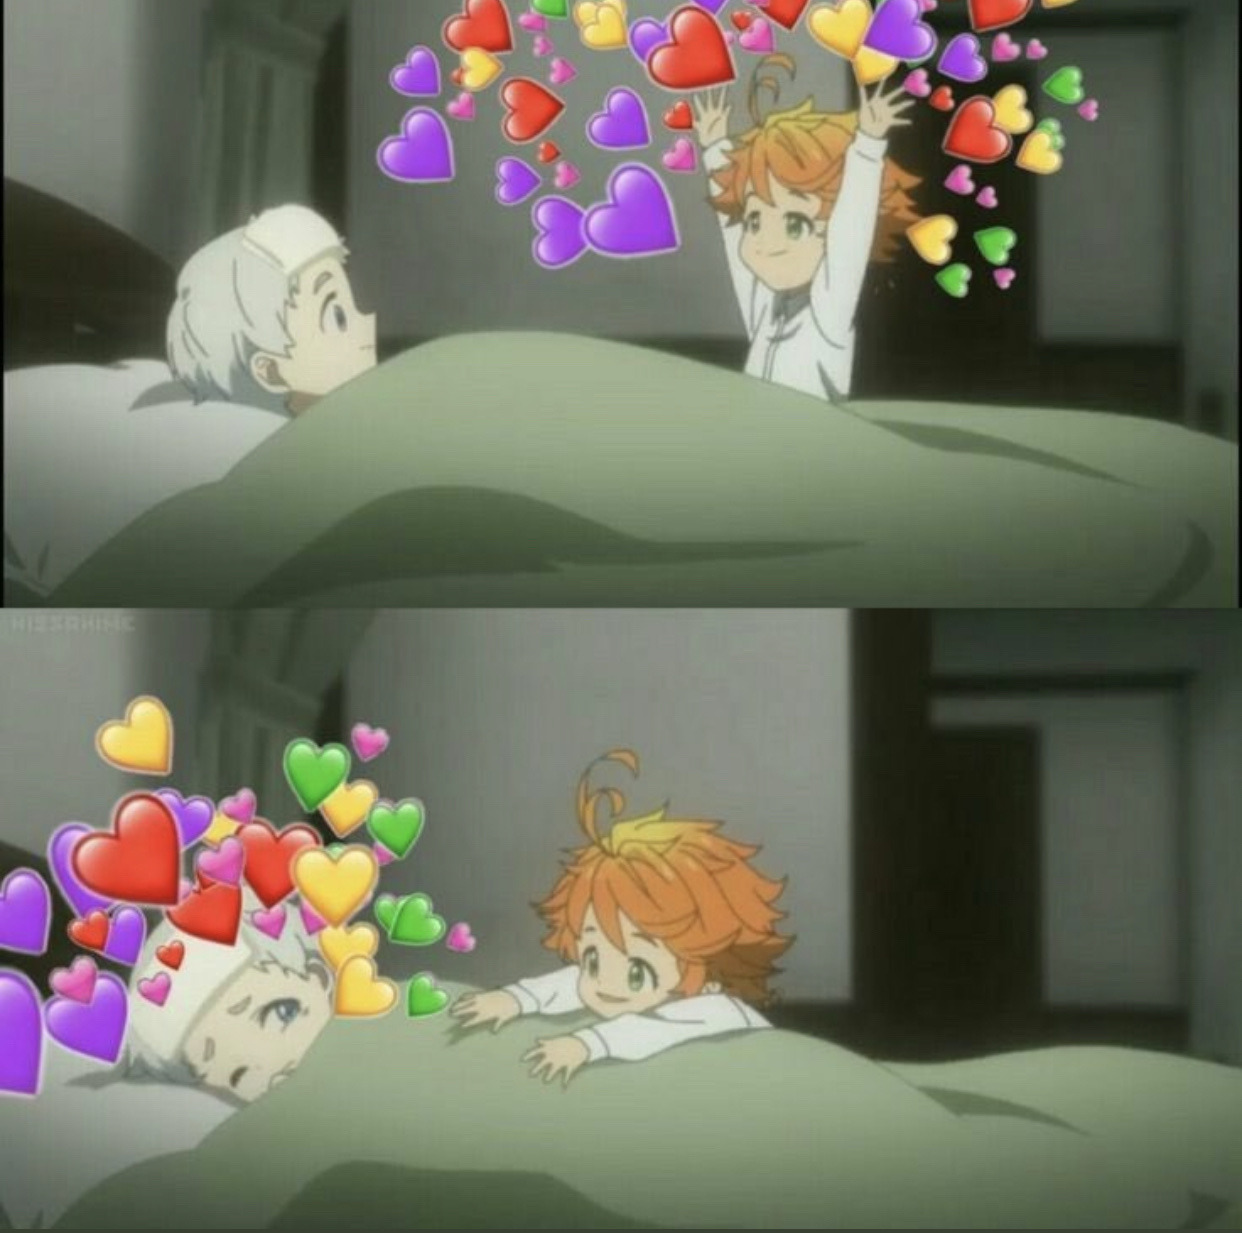 WHOLESOME Anime memes V4 | Anime memes, Cute love memes, Anime memes funny